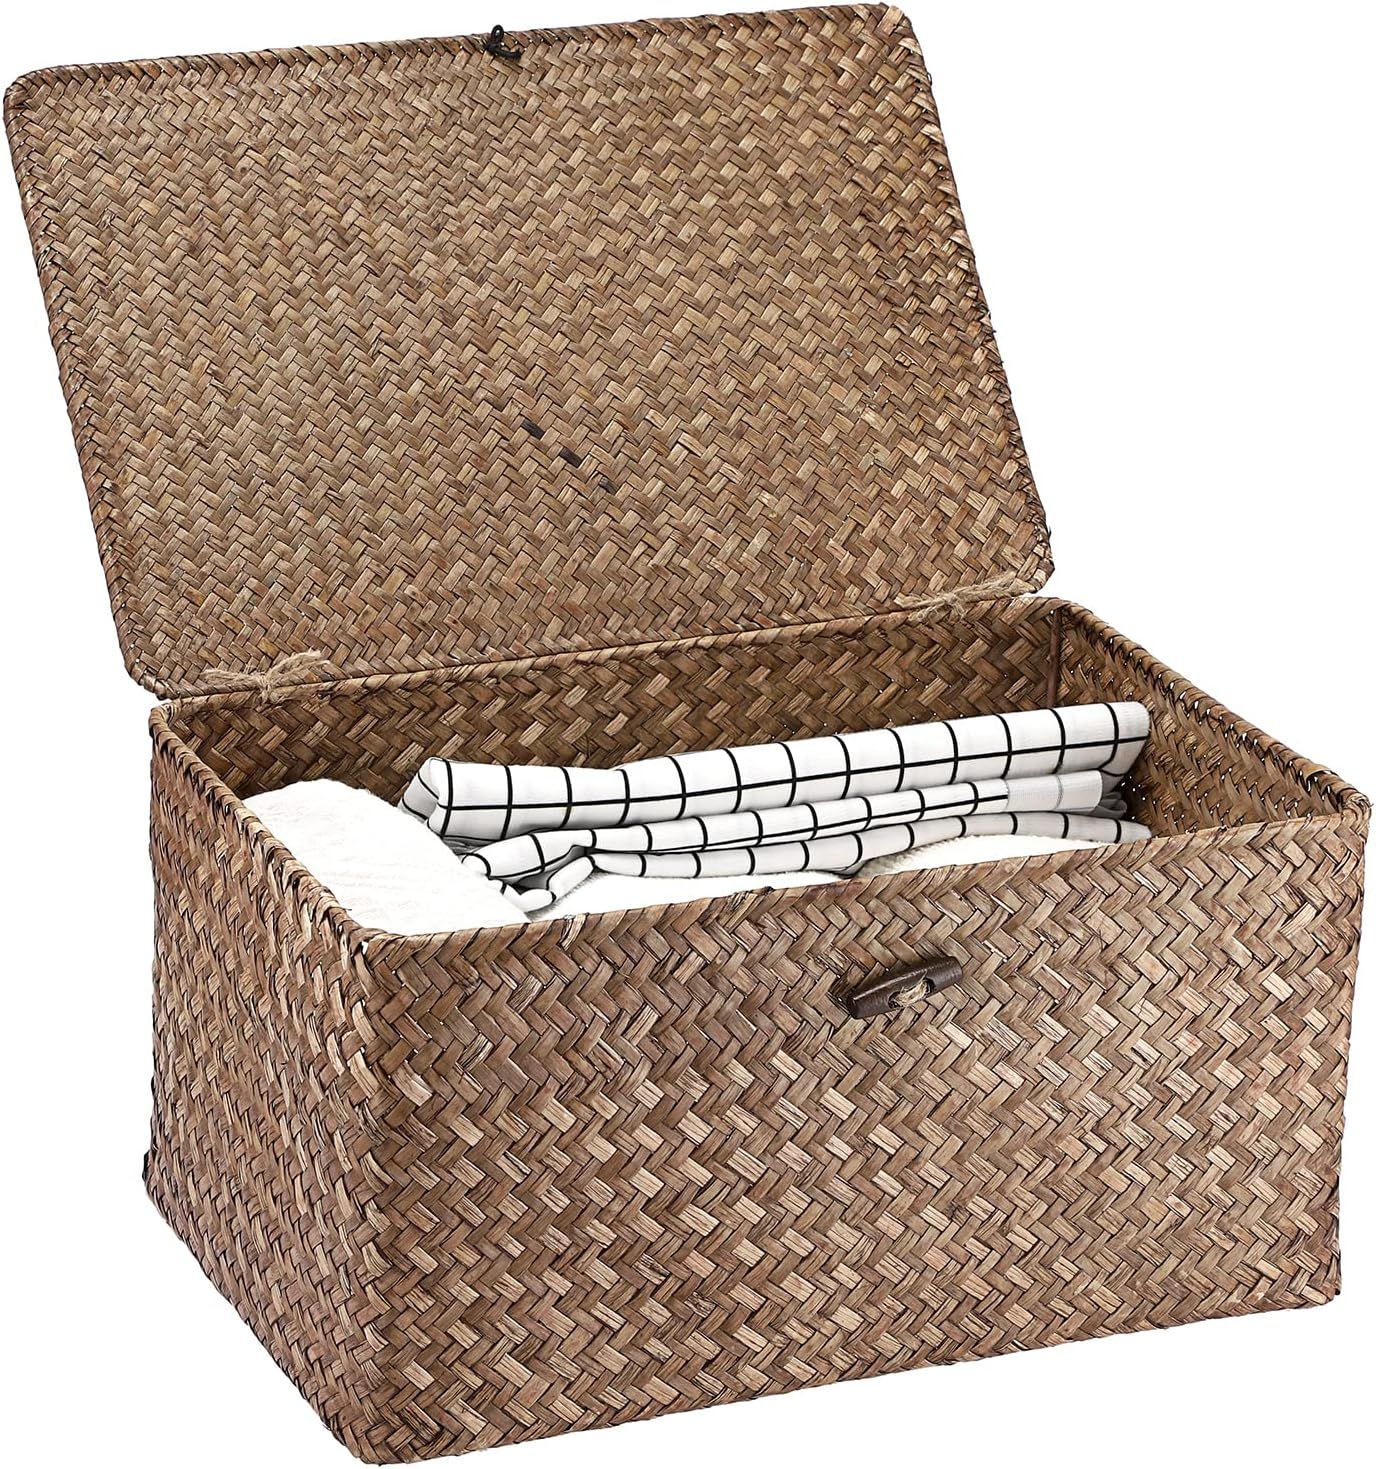 Hipiwe Wicker Shelf Baskets Bin with Lid, Handwoven Seagrass Basket Storage Bins Rectangular Hous... | Amazon (US)